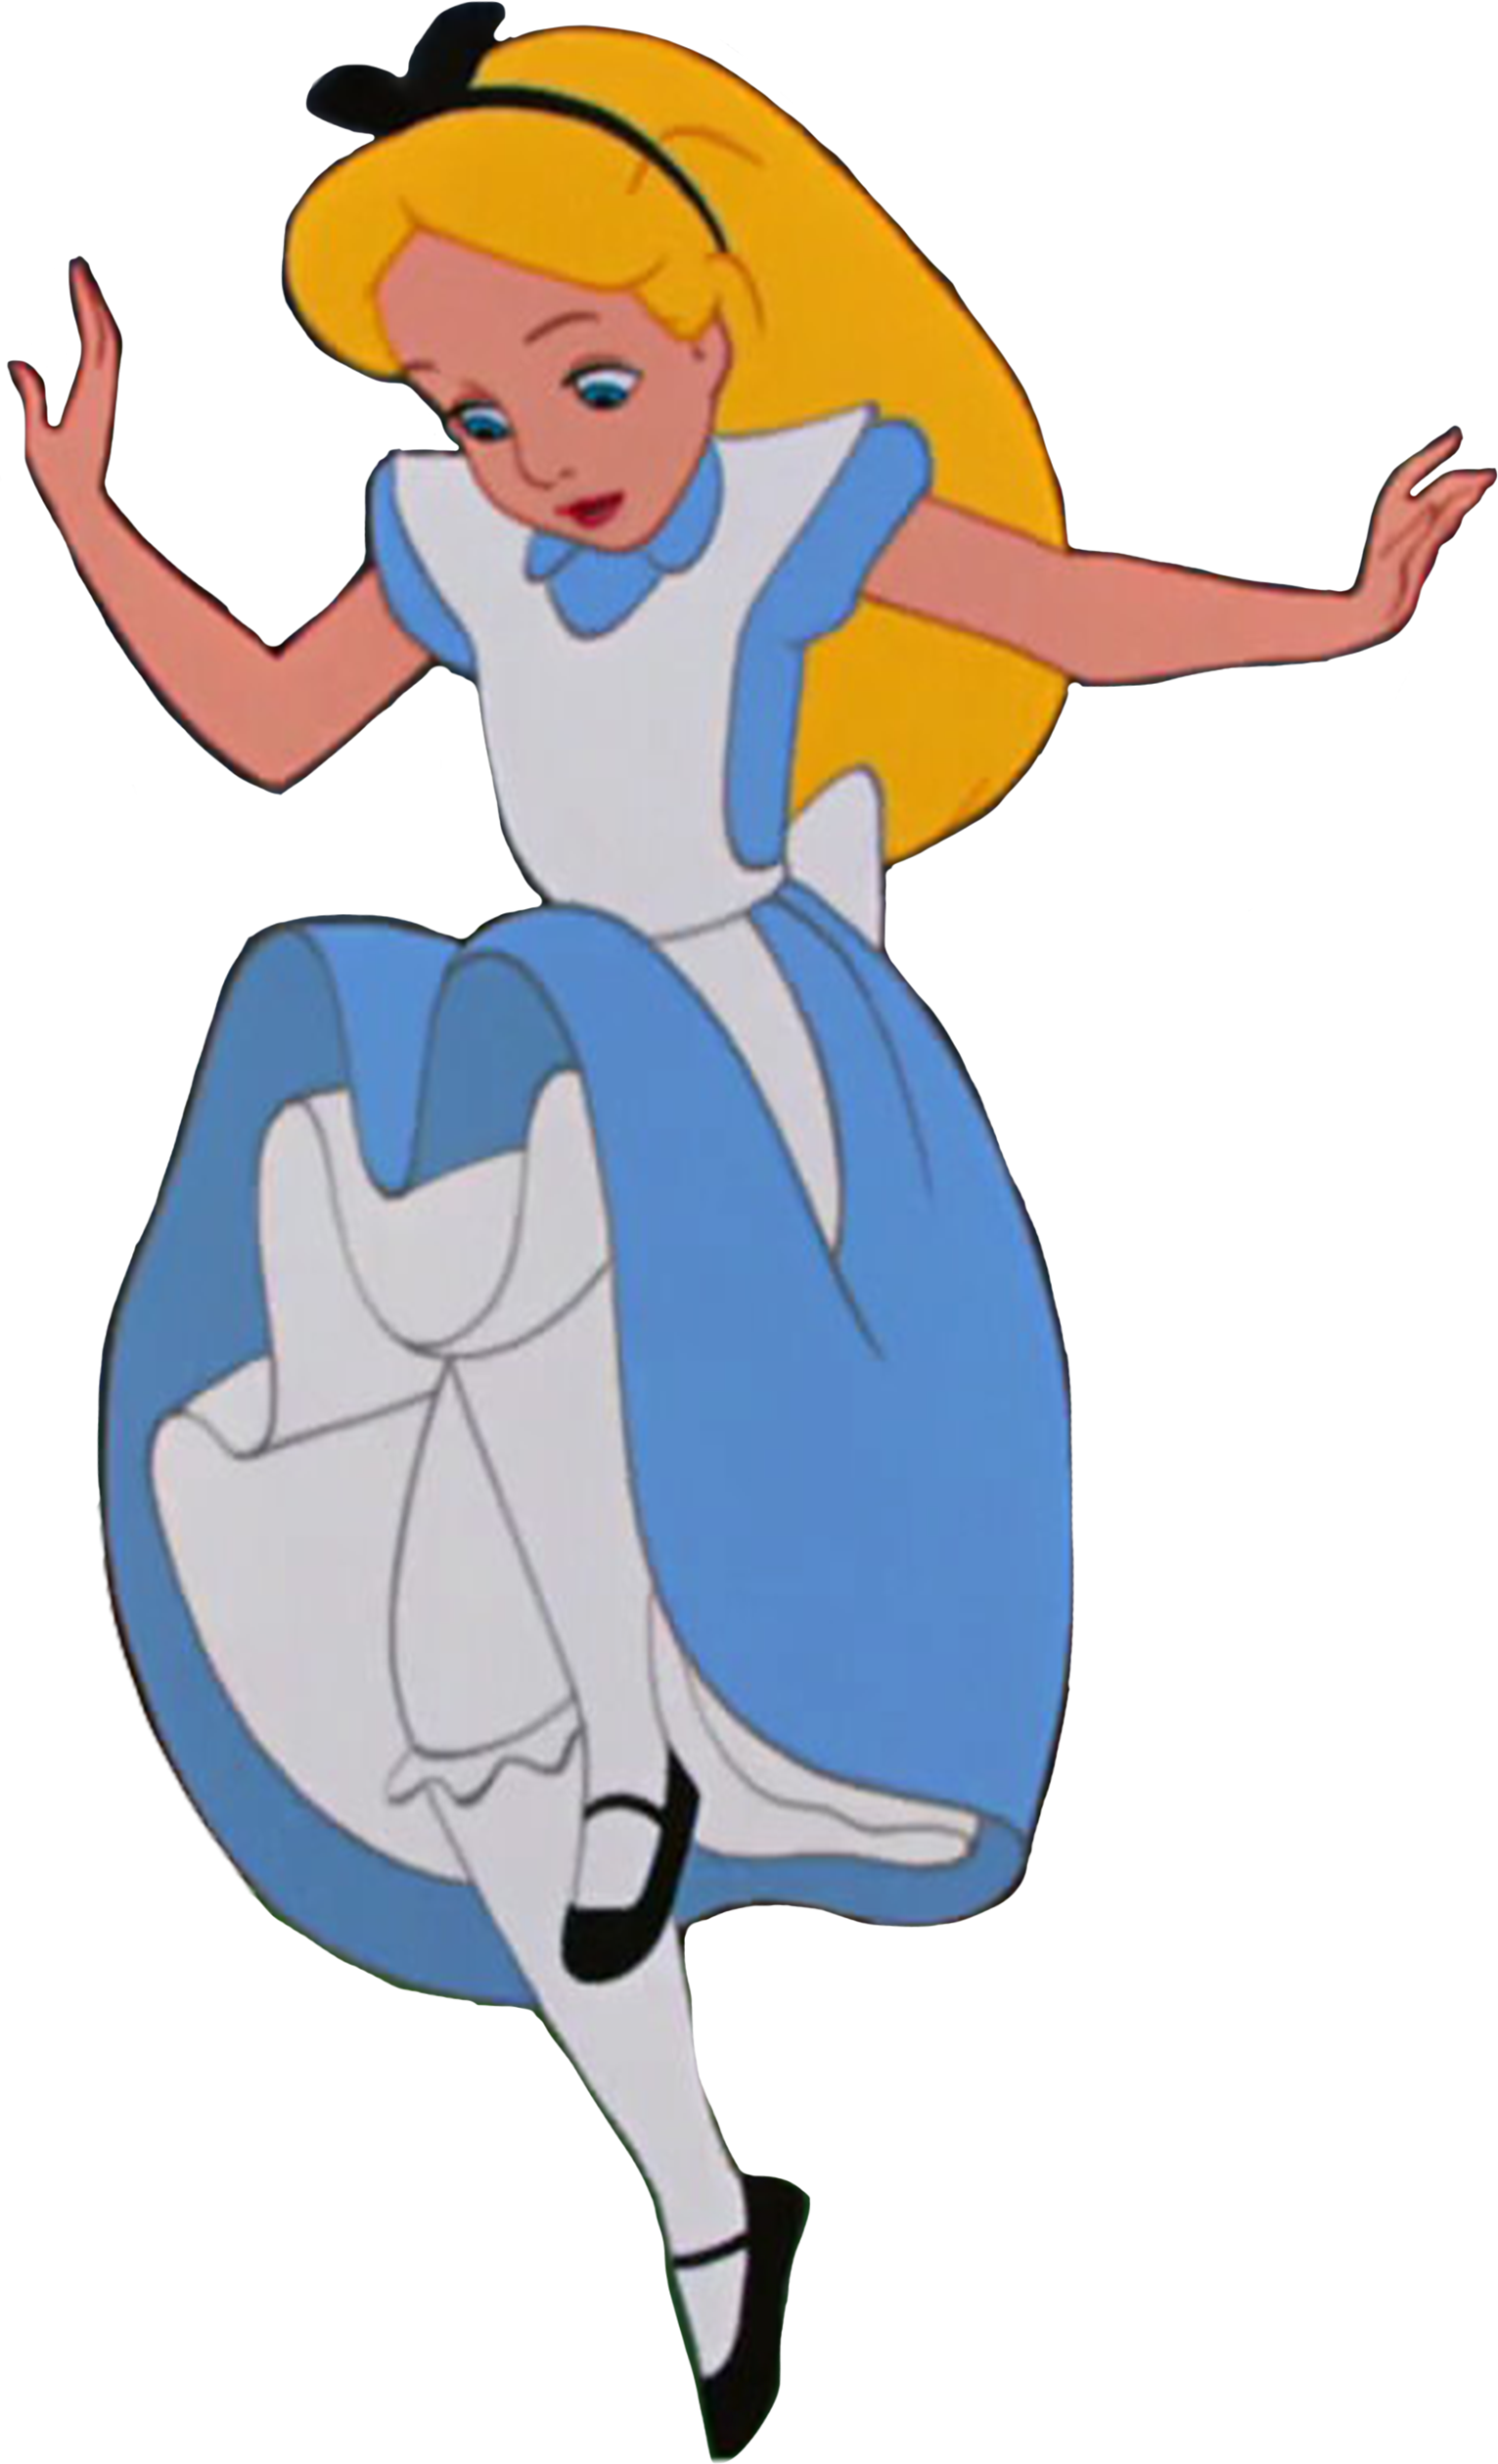 Alice (Disney) leaping vector by HomerSimpson1983 on DeviantArt